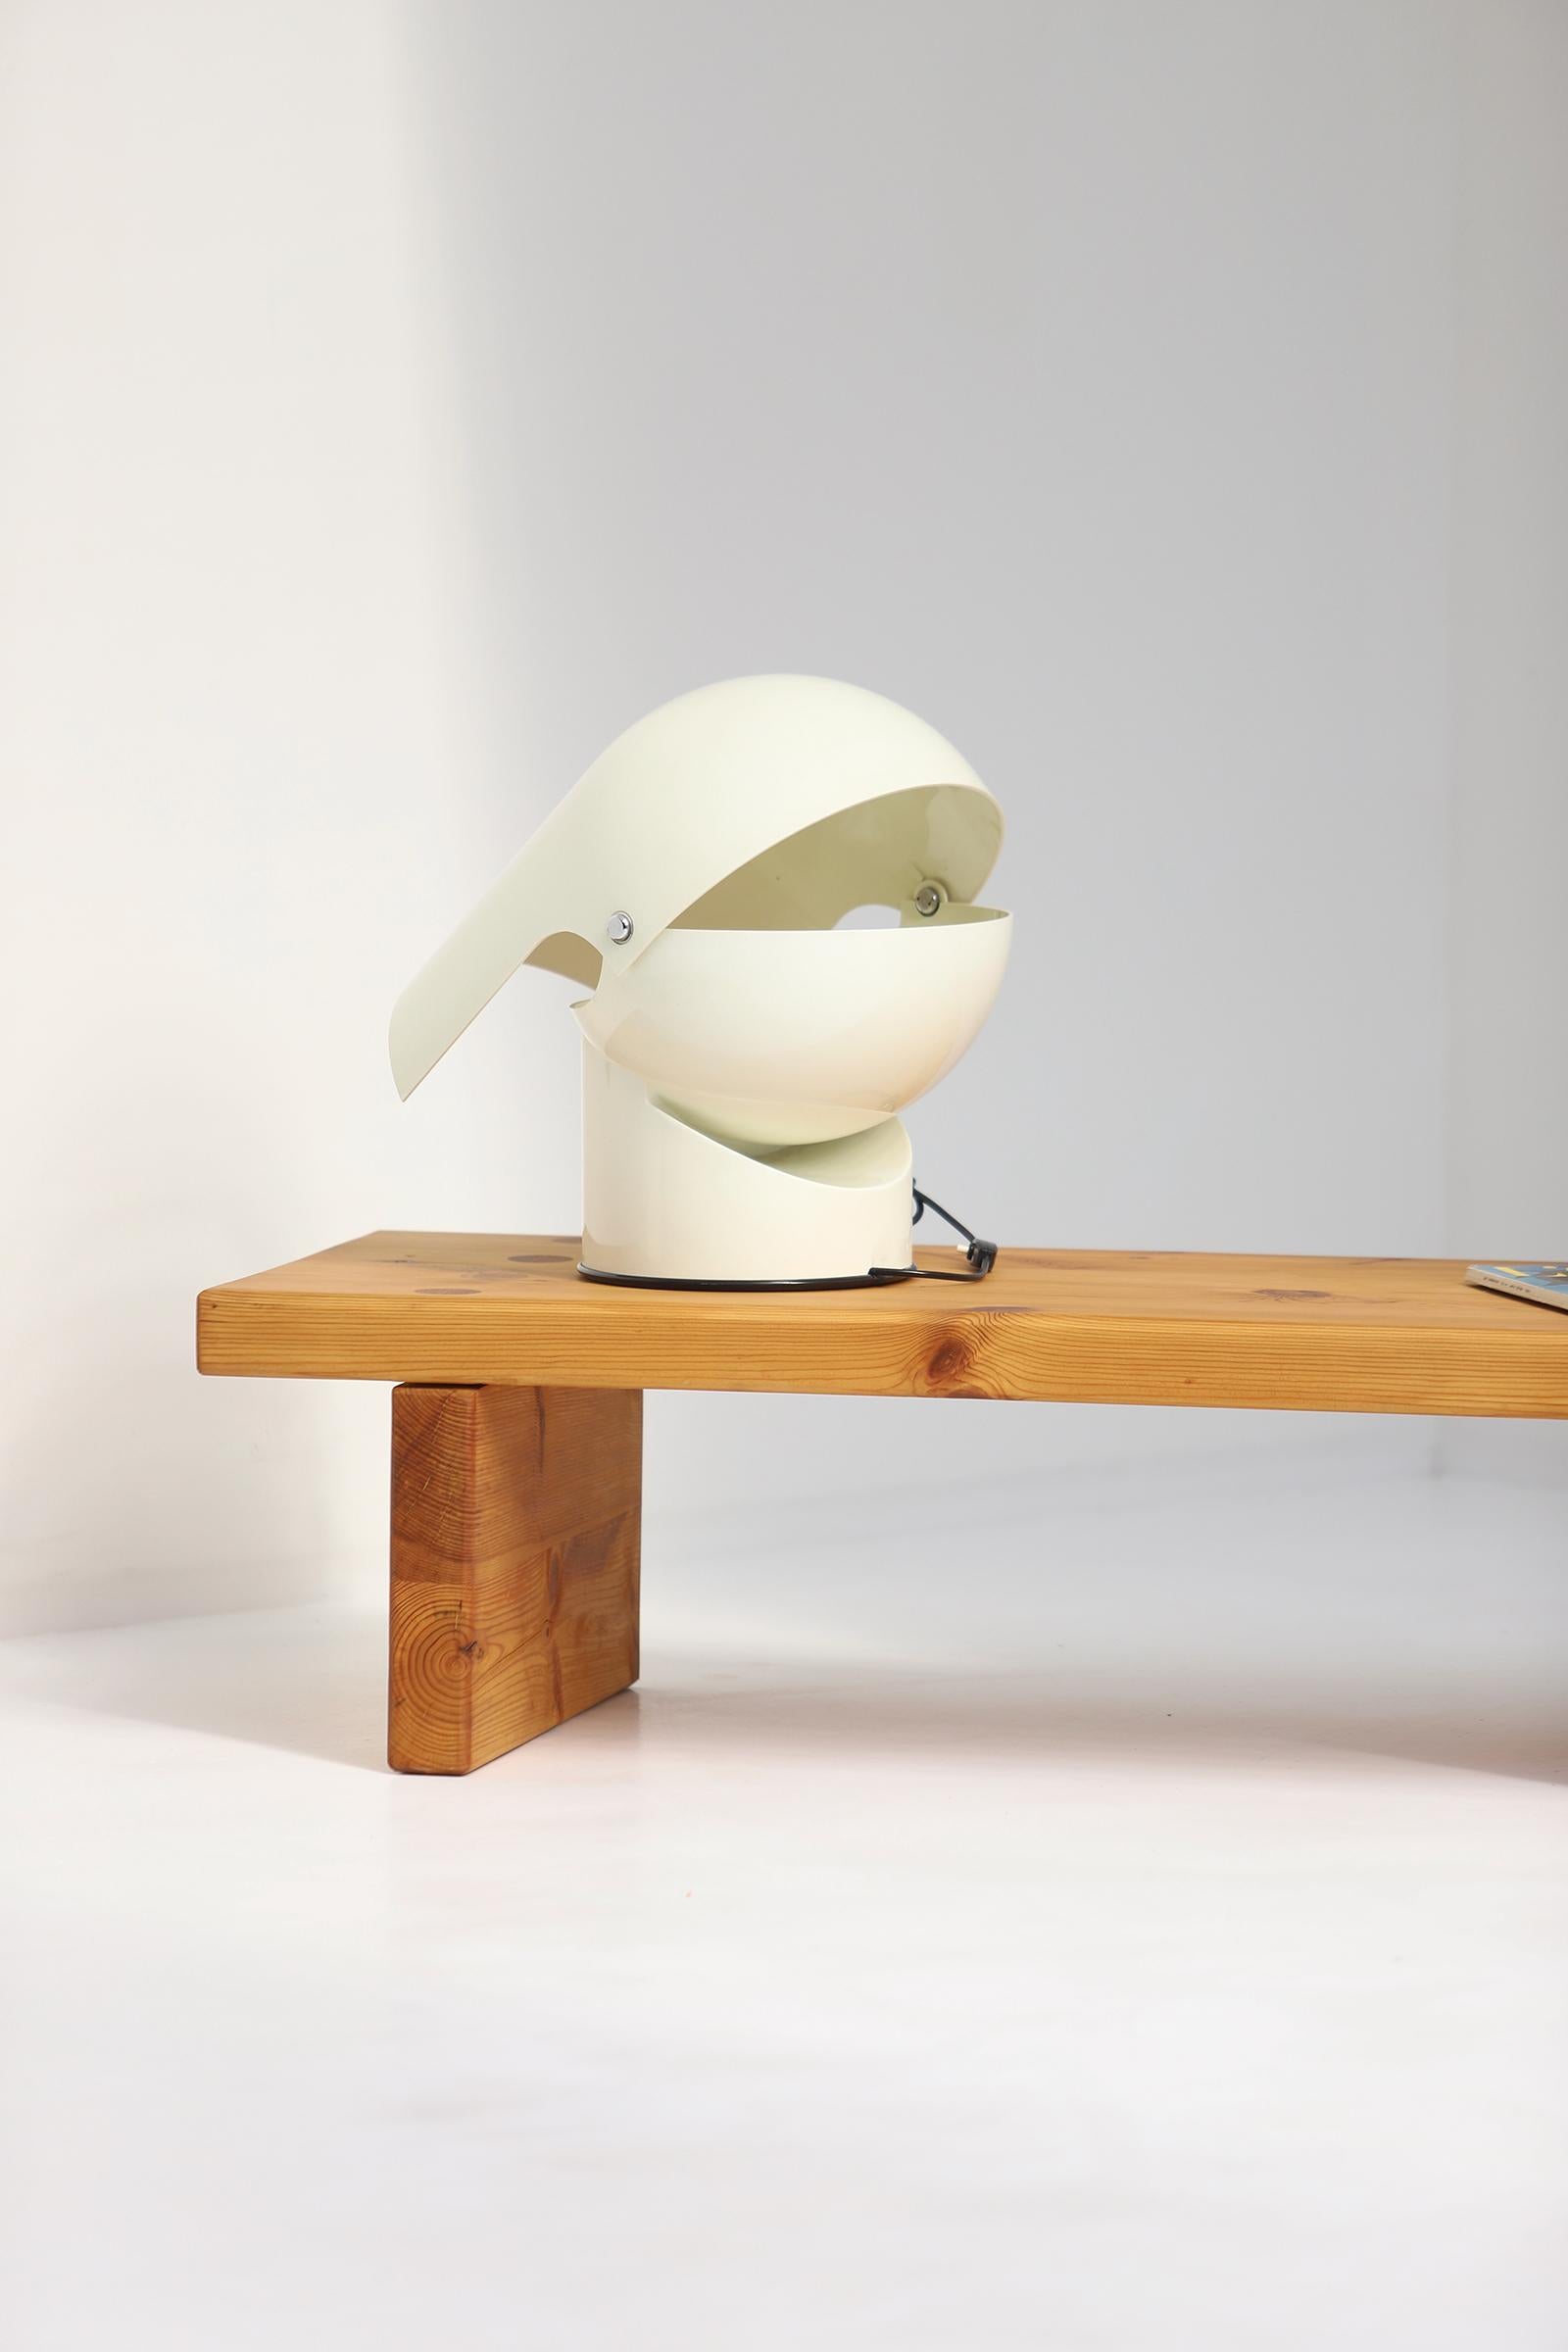 Italian Playful Mezzopileo Table Lamp Designed by Gae Aulenti for Artemide, Italy, 1972